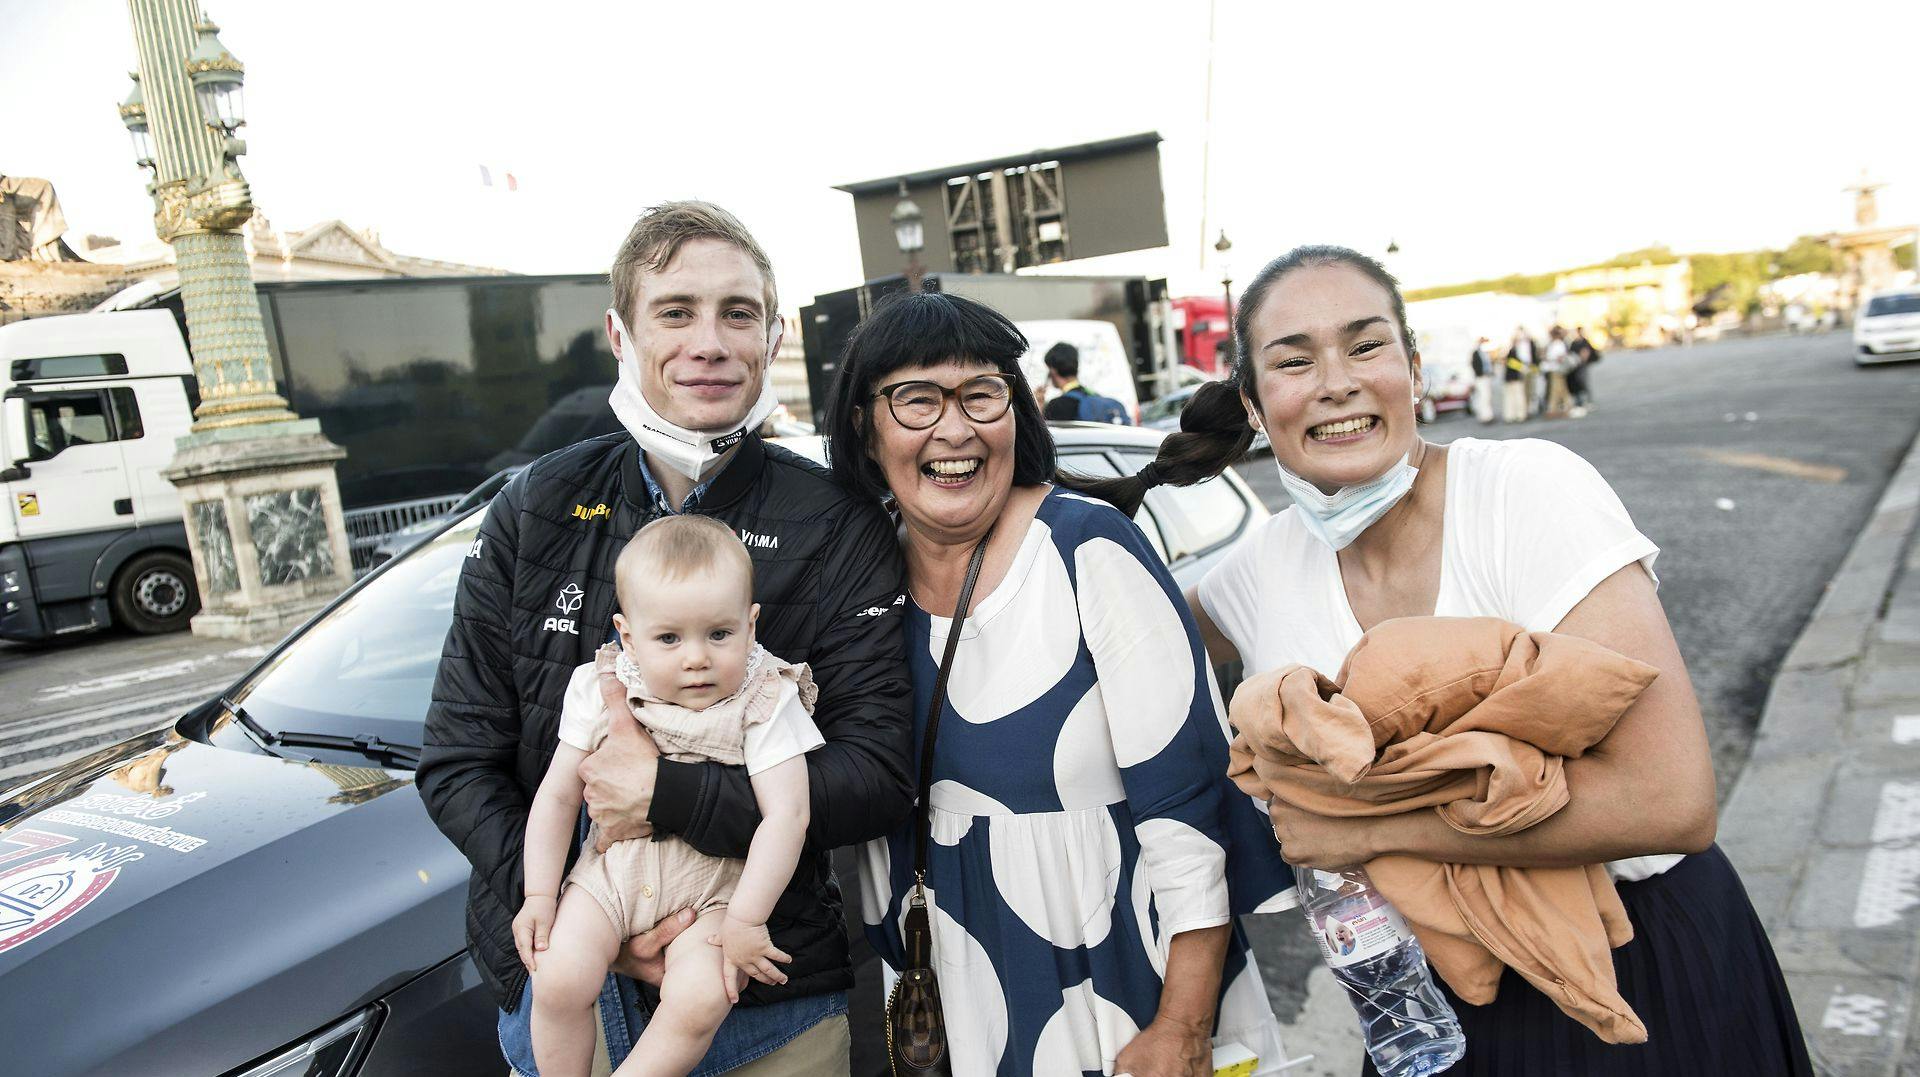 Jonas Vingegaard sammen med sin datter, Frida, sin kæreste, nbsp;Trine Marie Hansen, og sin ikke så ukendte svigermor&nbsp;Rosa Kildahl, der er kendt fra "Bagedysten".&nbsp;